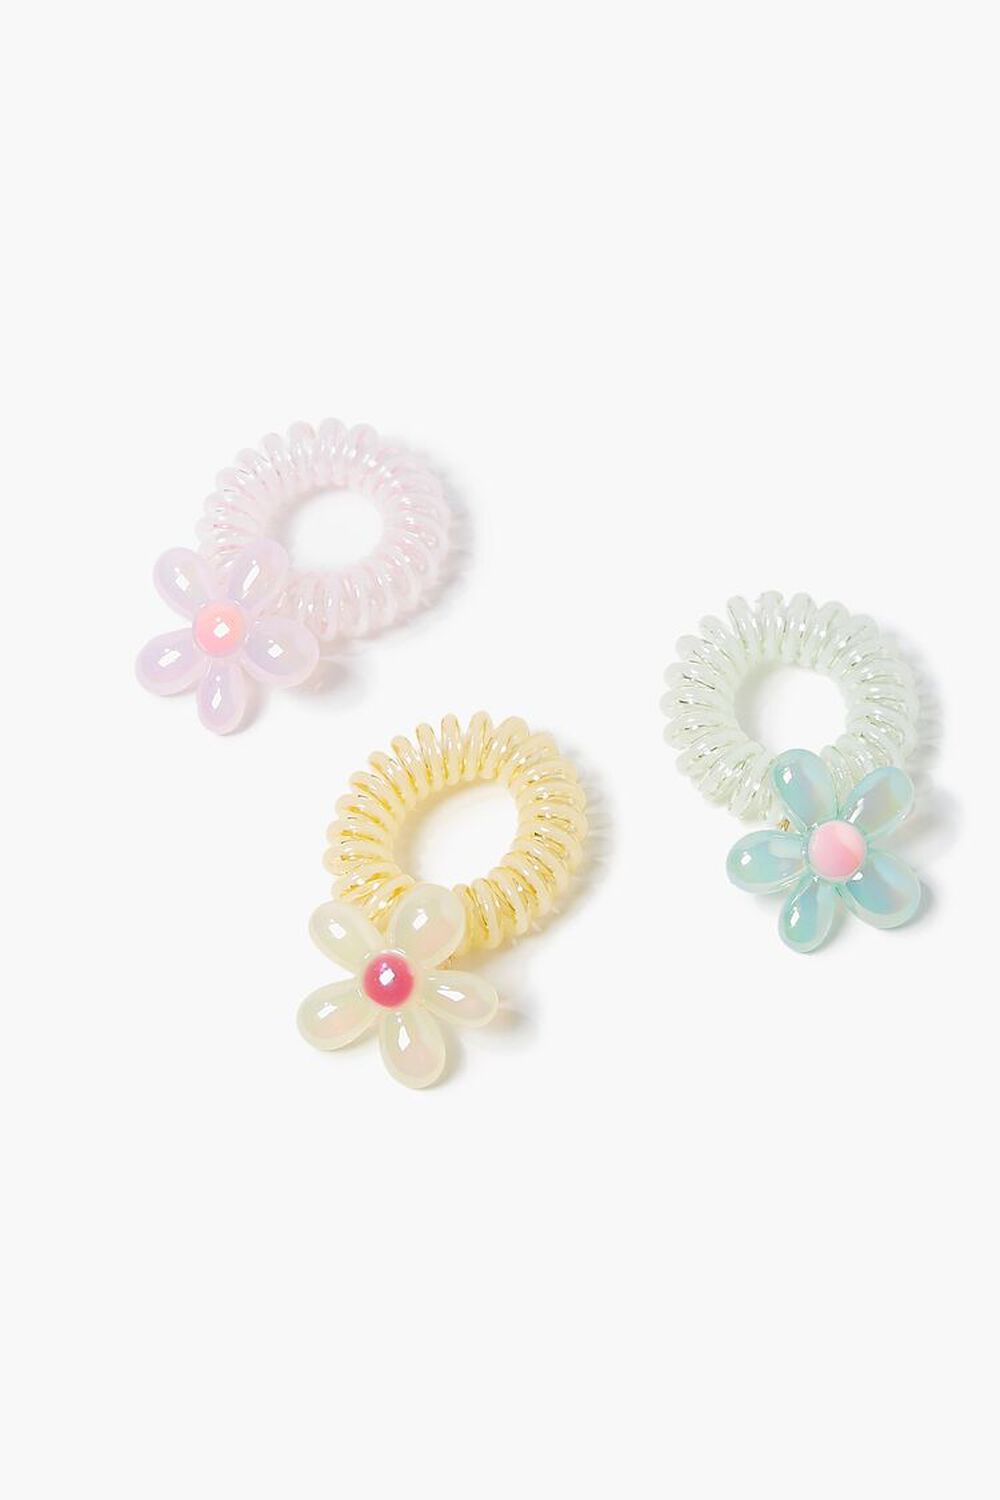 PINK/MULTI Floral Spiral Hair Tie Set, image 1